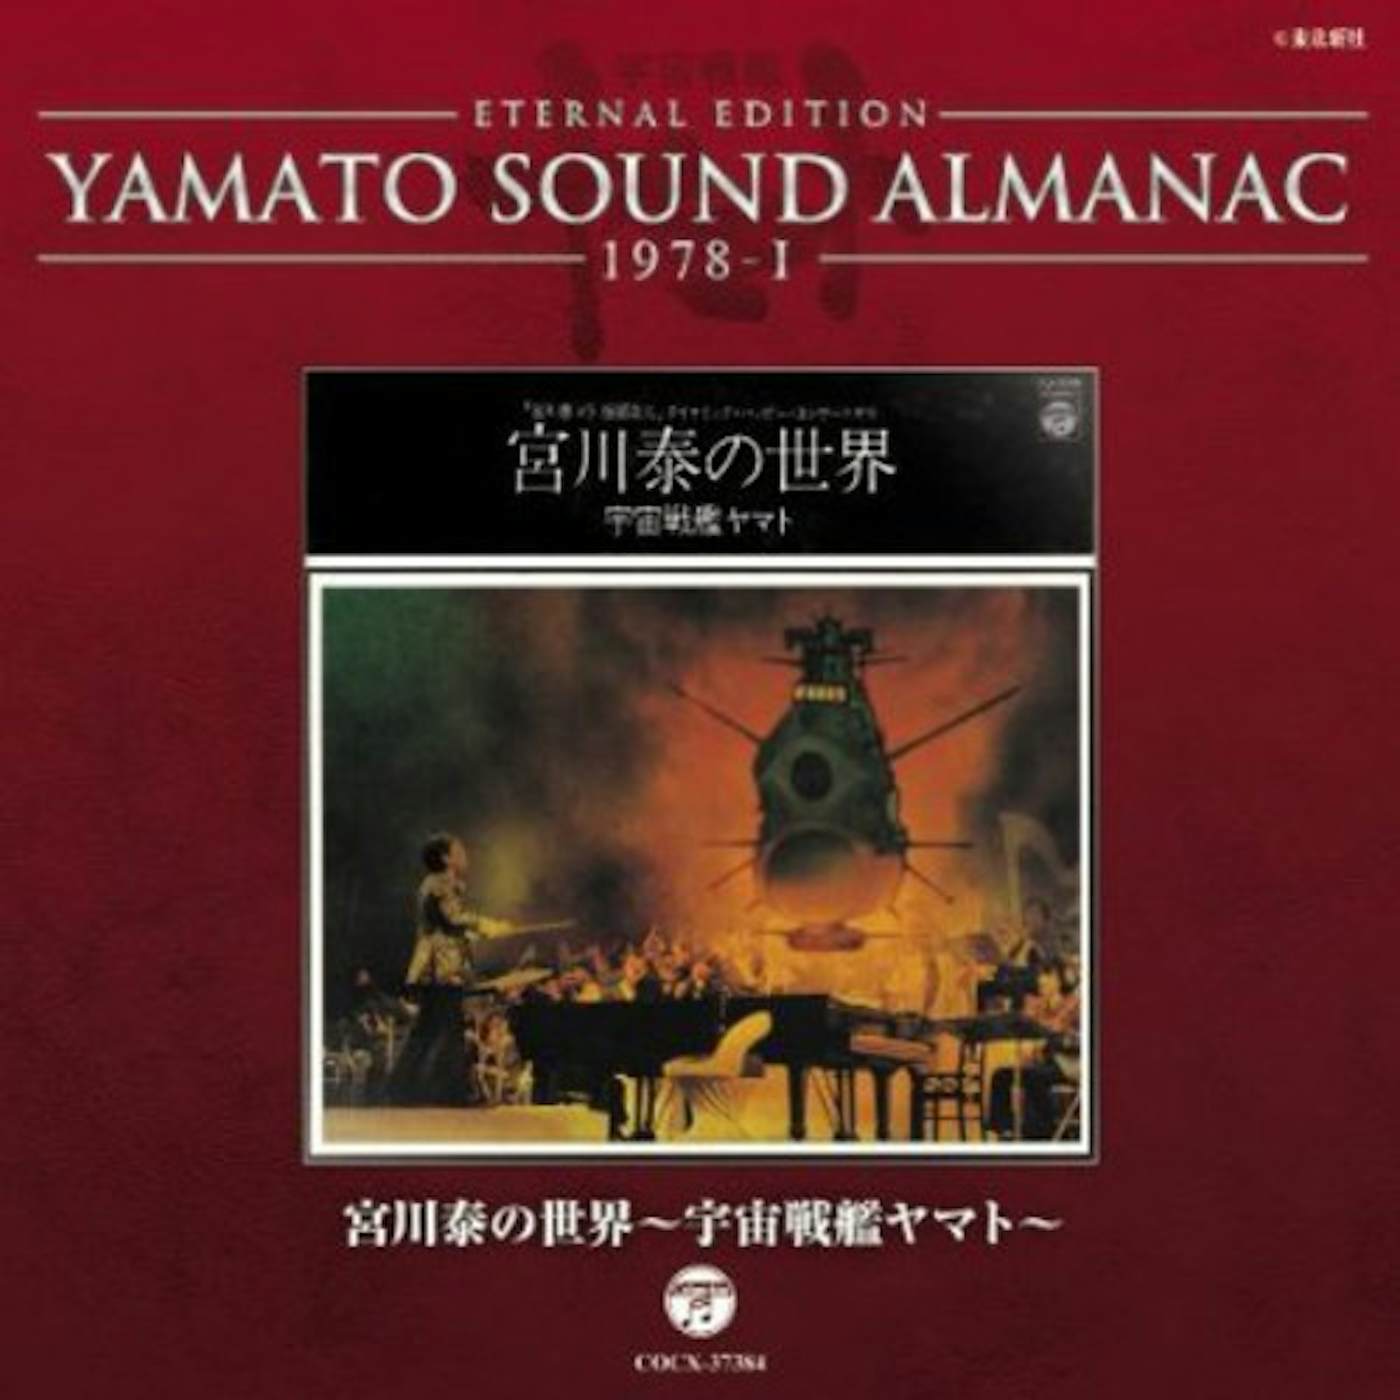 Animation ETERNAL EDITION YAMATO SOUND ALMANAC 1978-1 MIYAGA CD